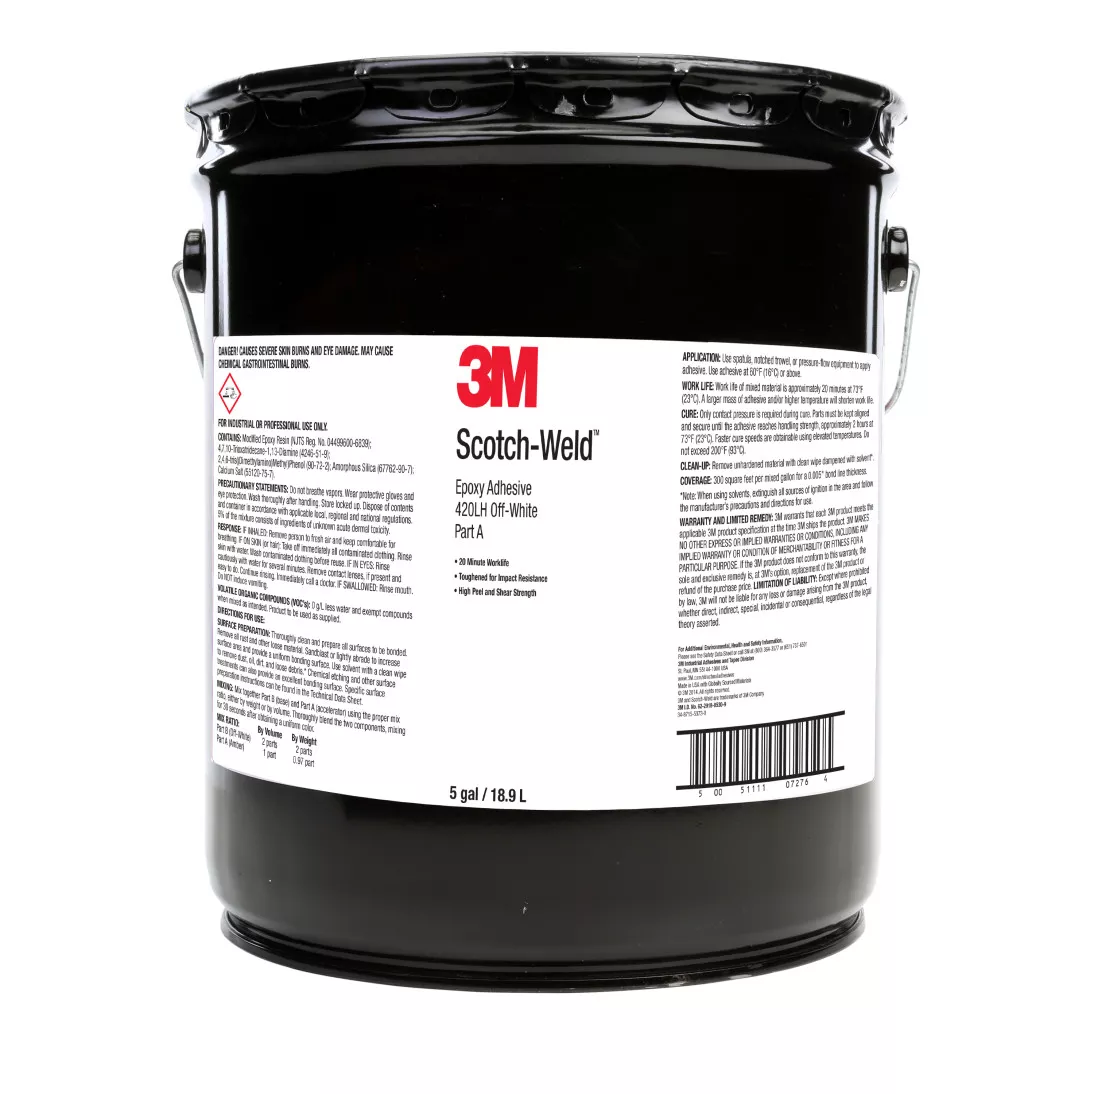 3M™ Scotch-Weld™ Epoxy Adhesive 420LH, Off-White, Part A, 5 Gallon Drum
(Pail)